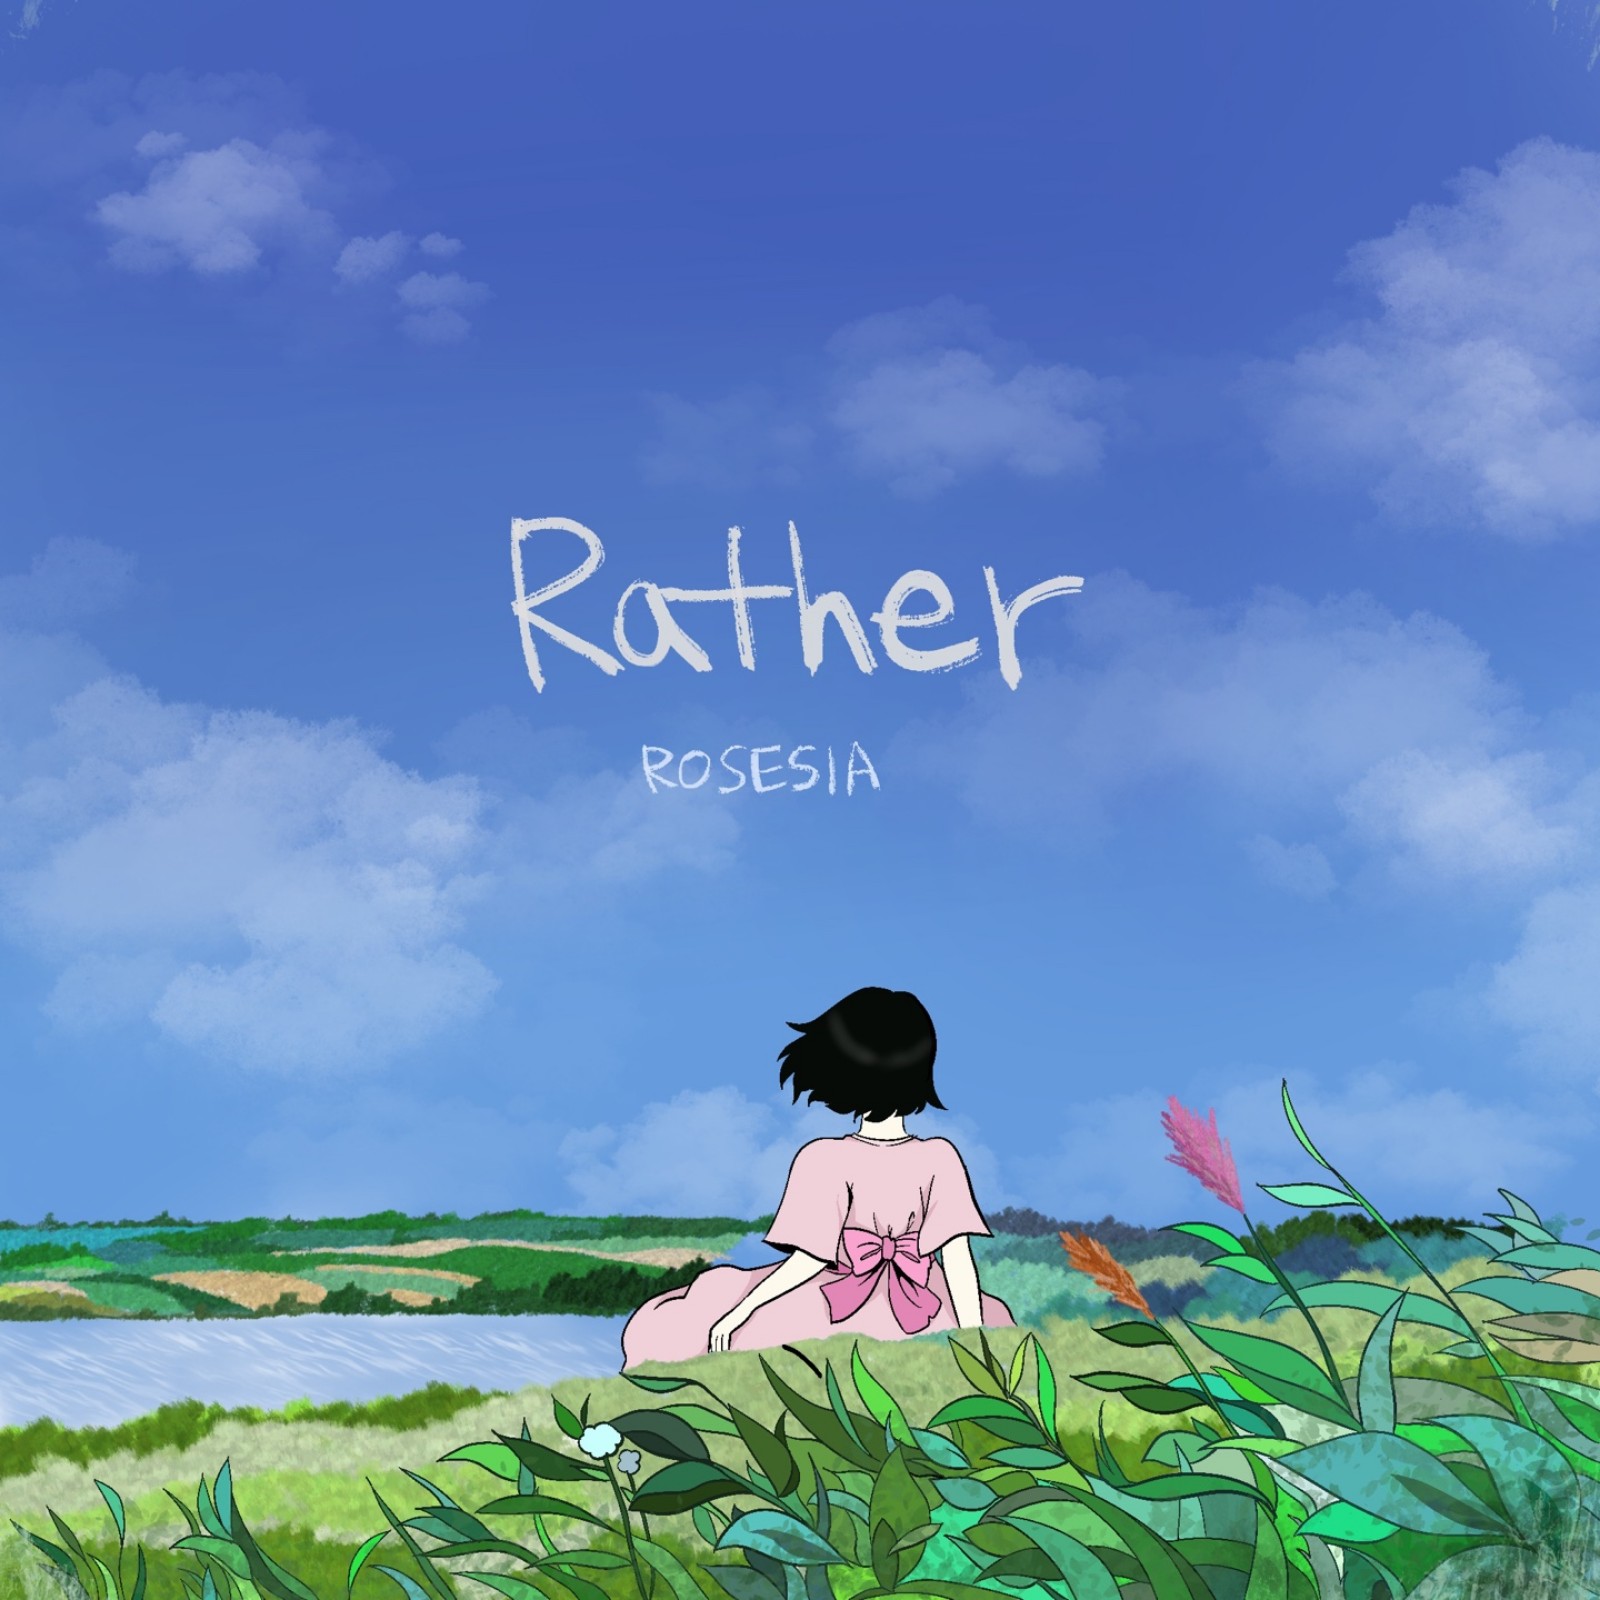 Rather